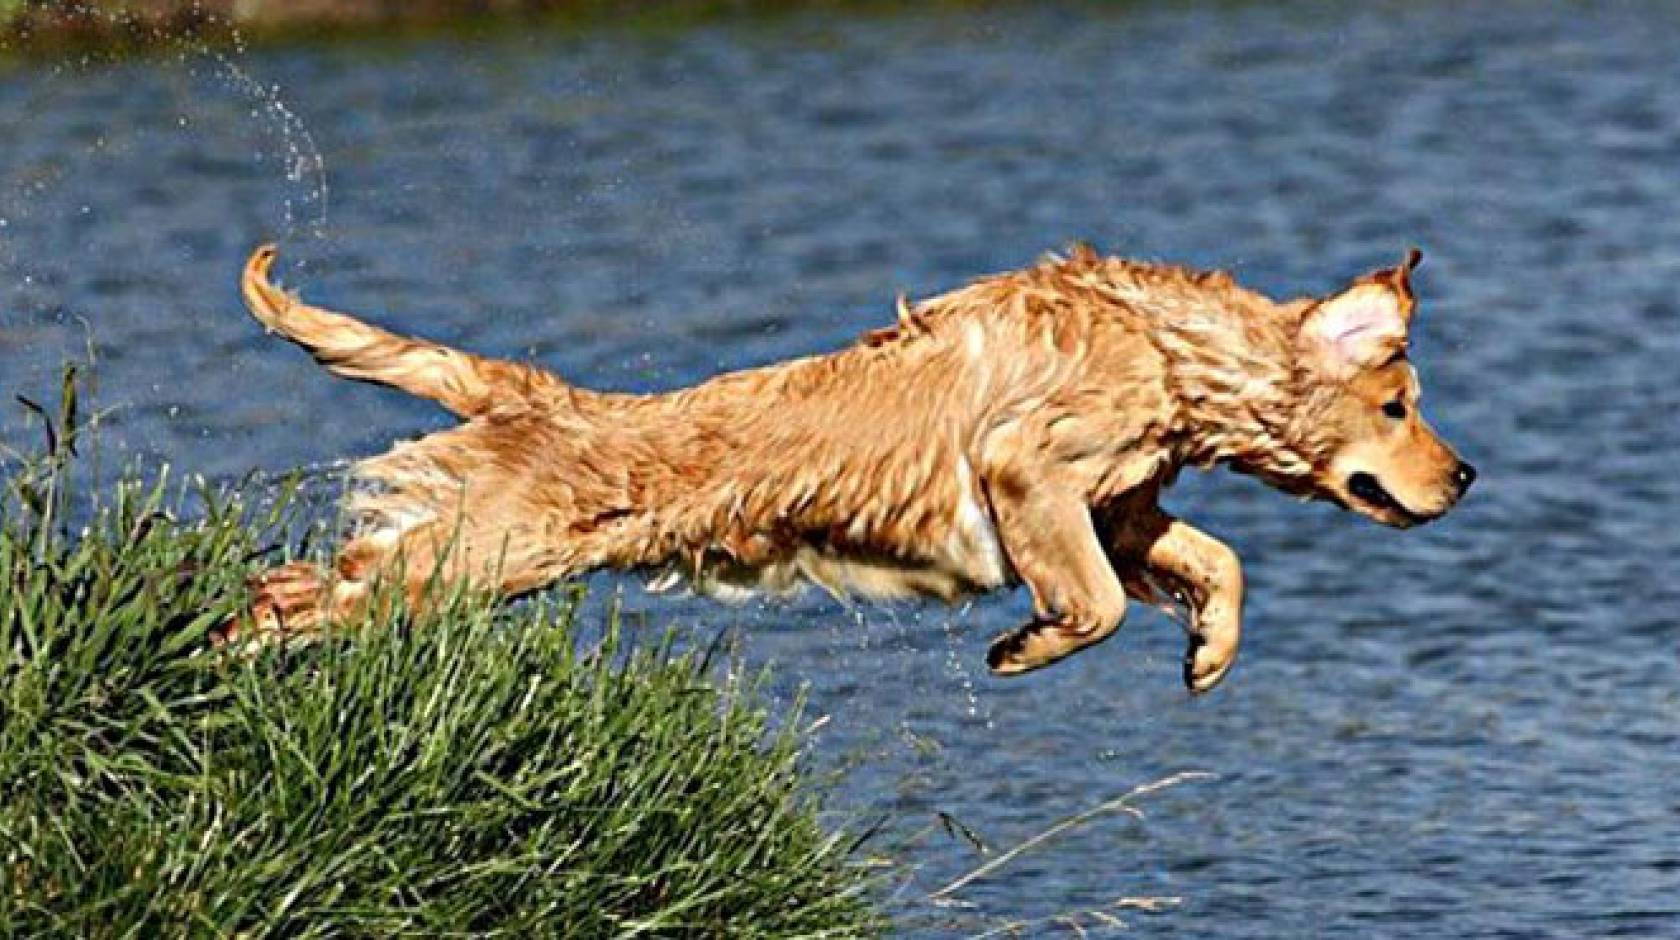 A golden retriever jumps in a pond